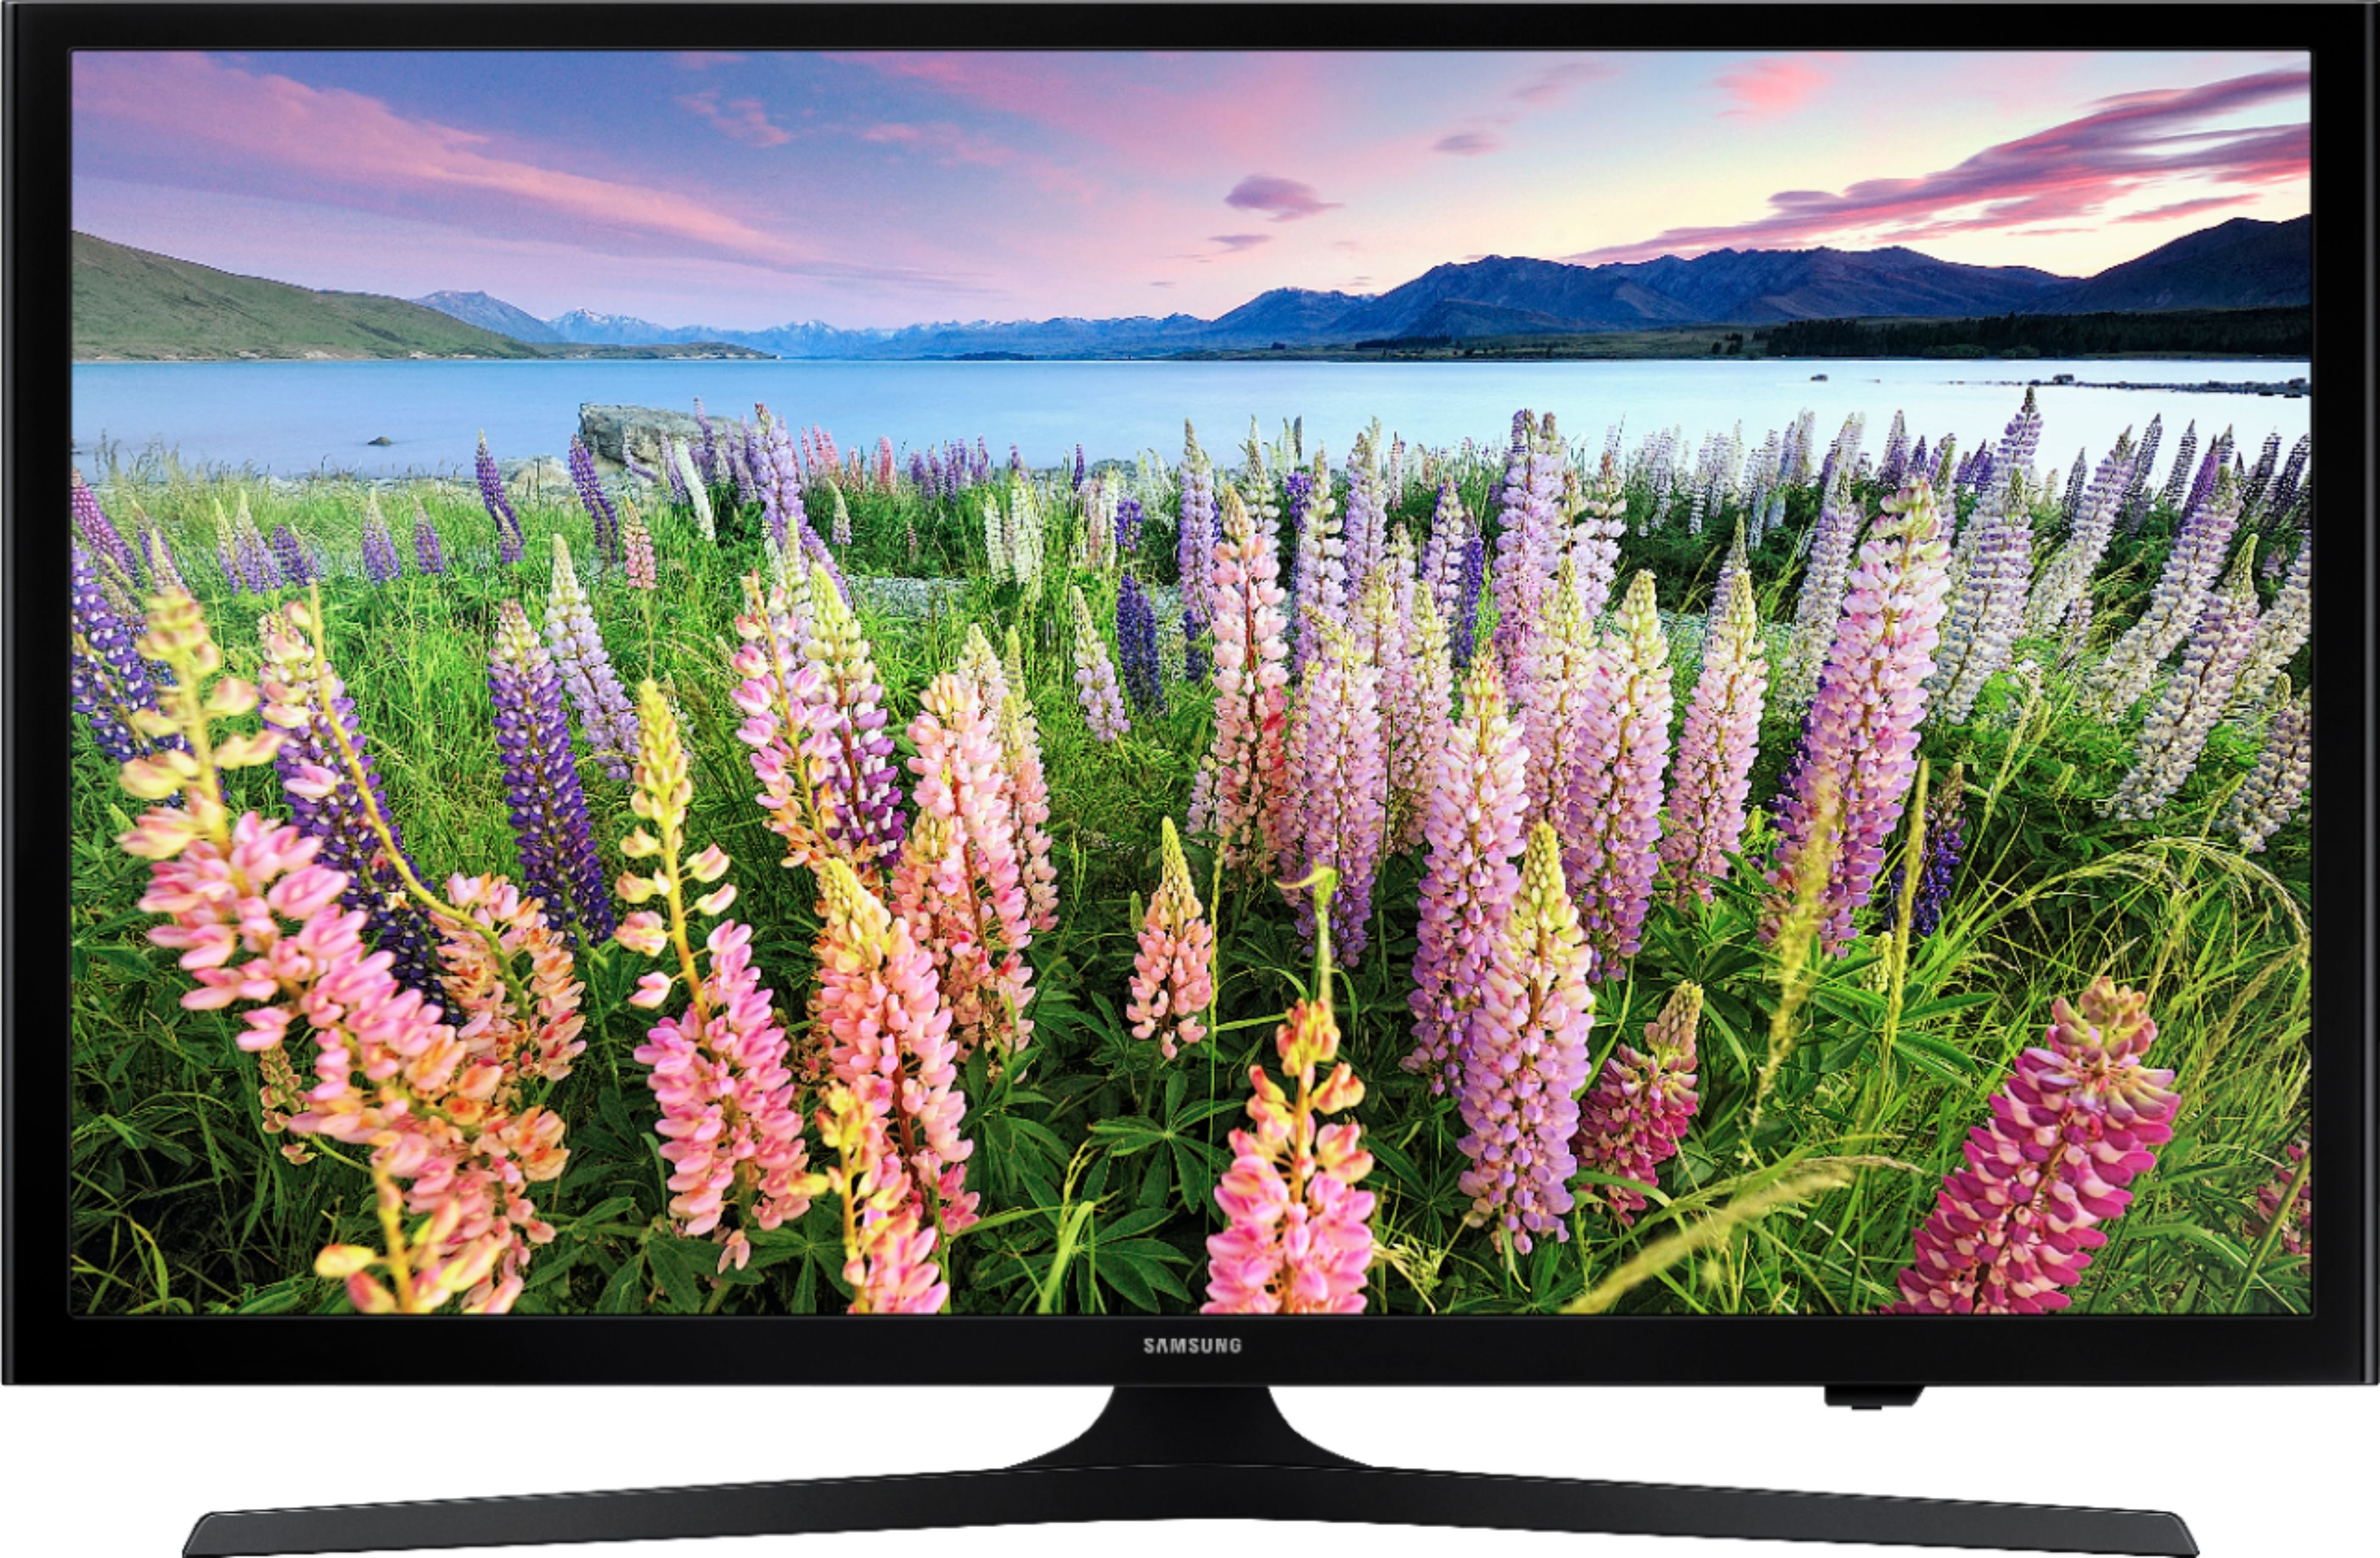 Samsung 43" Class (42.5" Diag.) 1080p Smart HDTV UN43J5200AFXZA - Best Buy